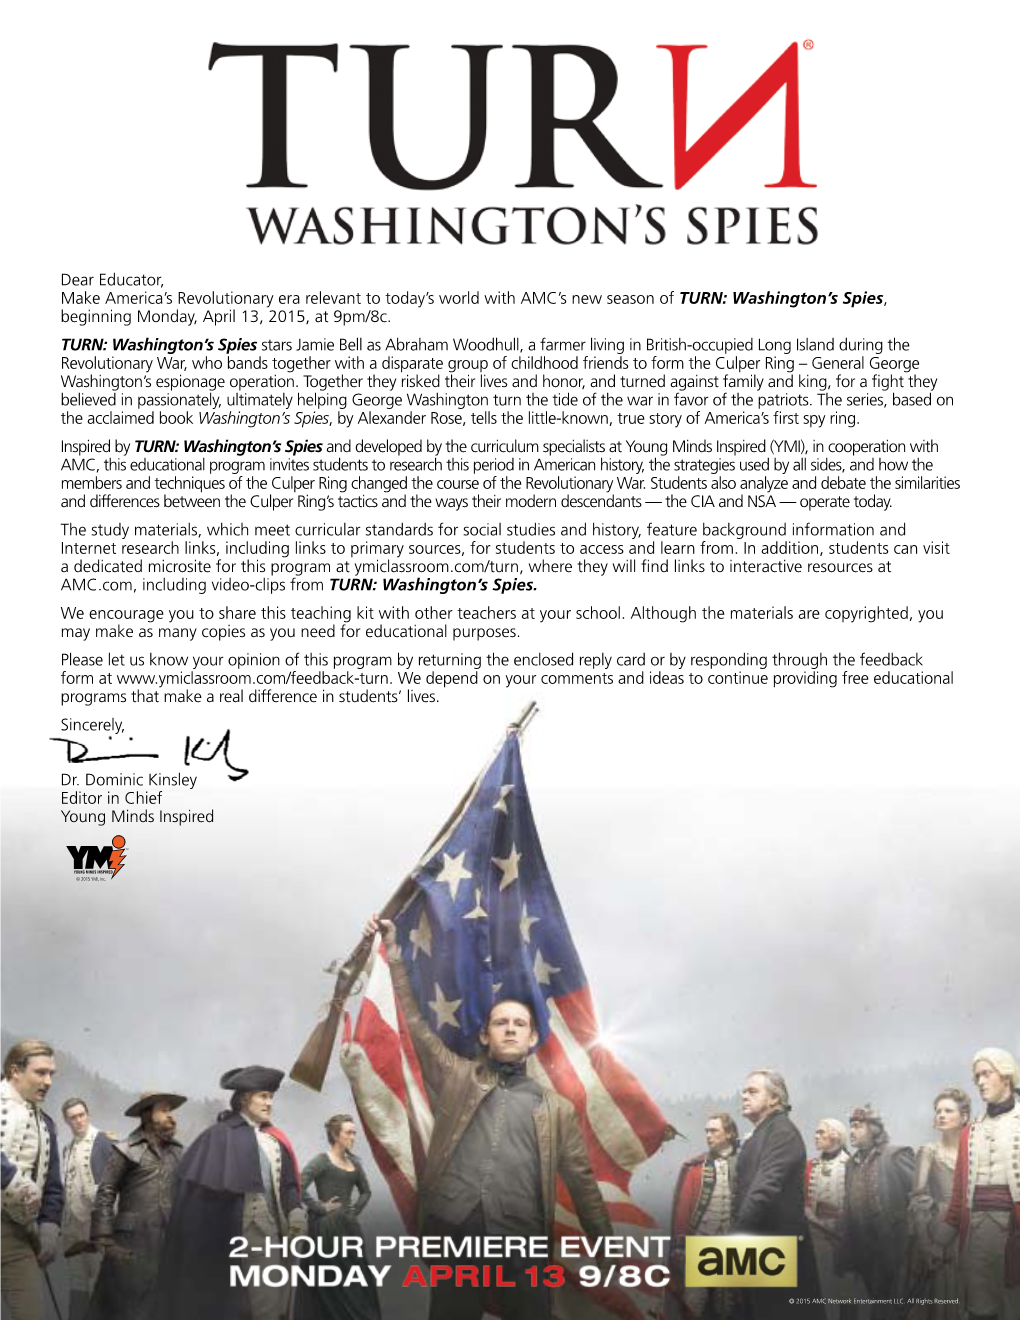 Dear Educator, Make America's Revolutionary Era Relevant to Today's World with AMC's New Season of TURN: Washington's Sp